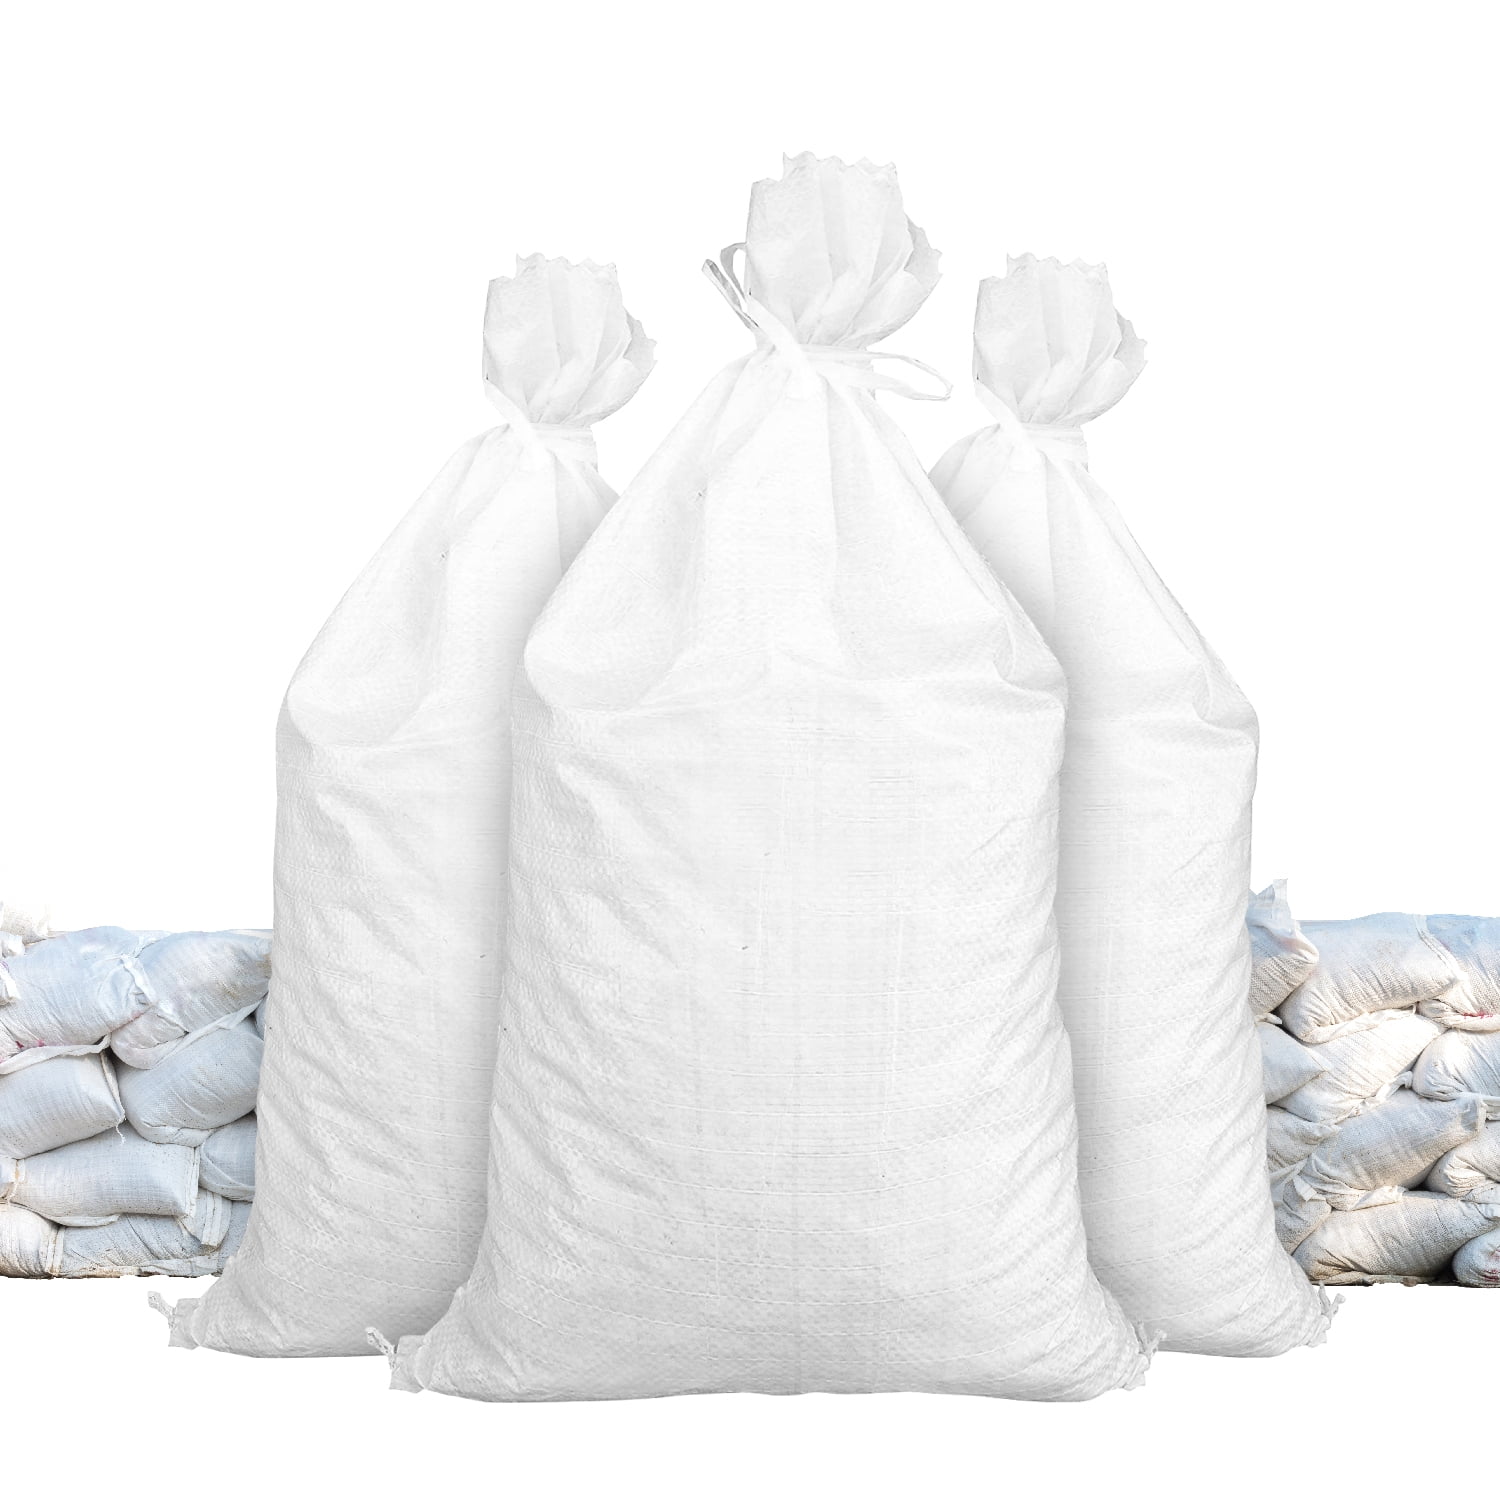 Sandbags For Flooding - Size: 14